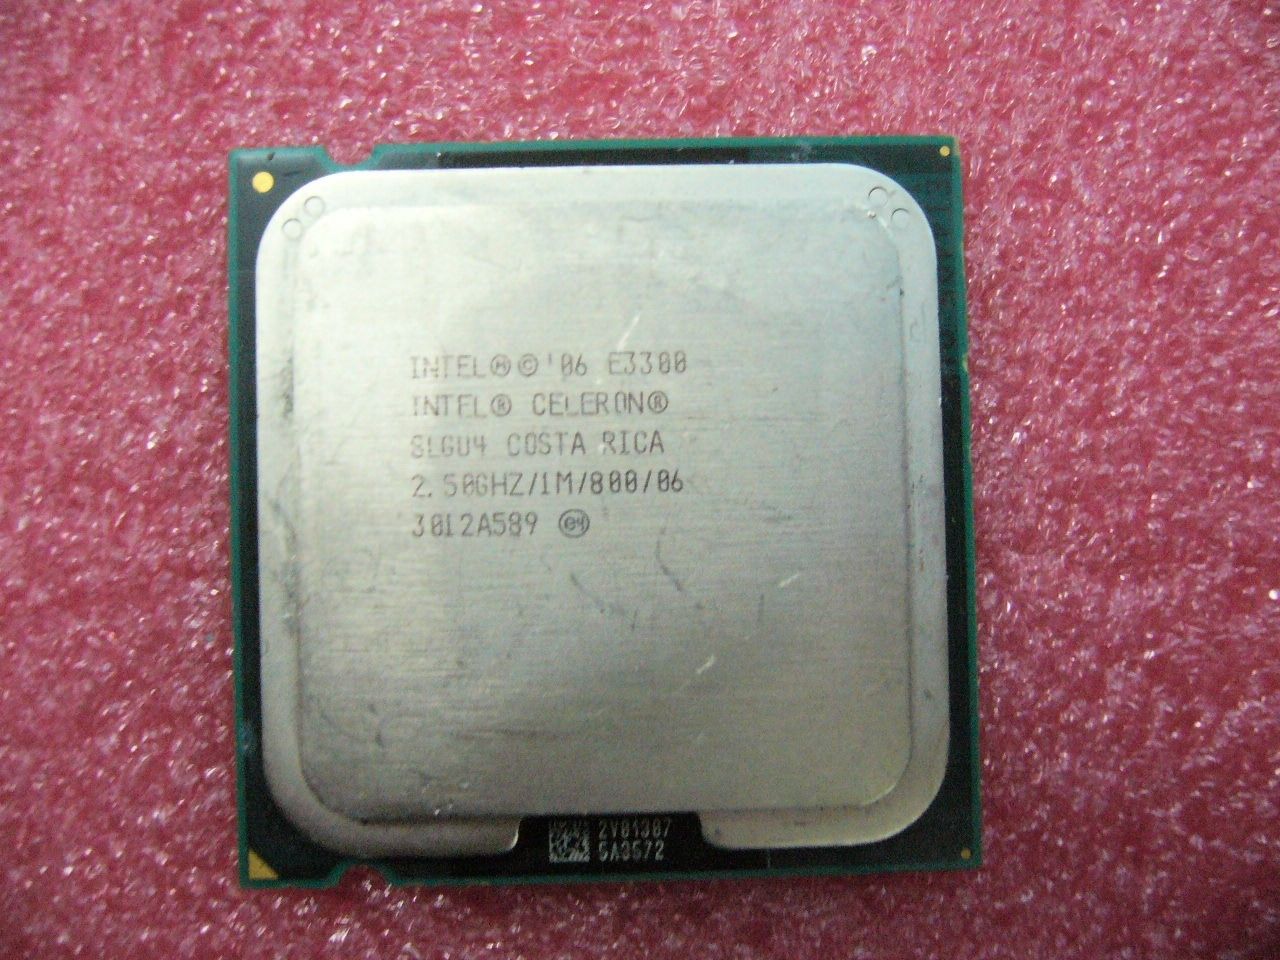 QTY 1x INTEL Celeron E3300 CPU 2.5GHz/1MB/800Mhz LGA775 SLGU4 - Click Image to Close